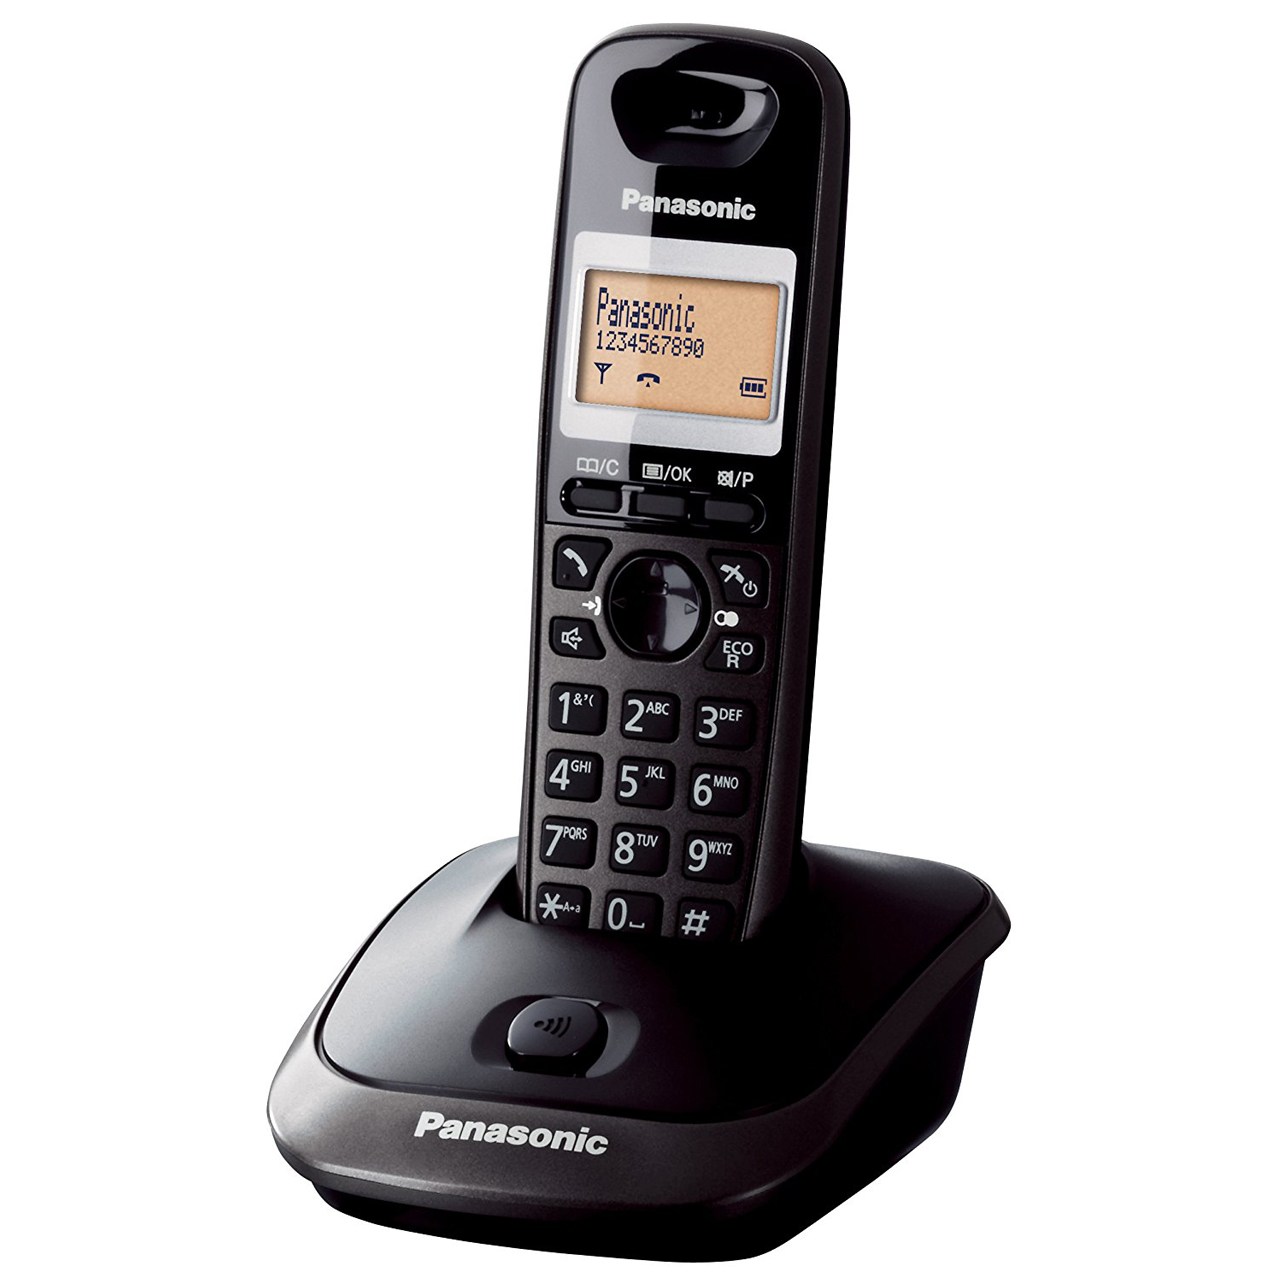  تلفن بي سيم KX-TG2511 پاناسونيک ا Panasonic KX-TG2511 Wireless Phone